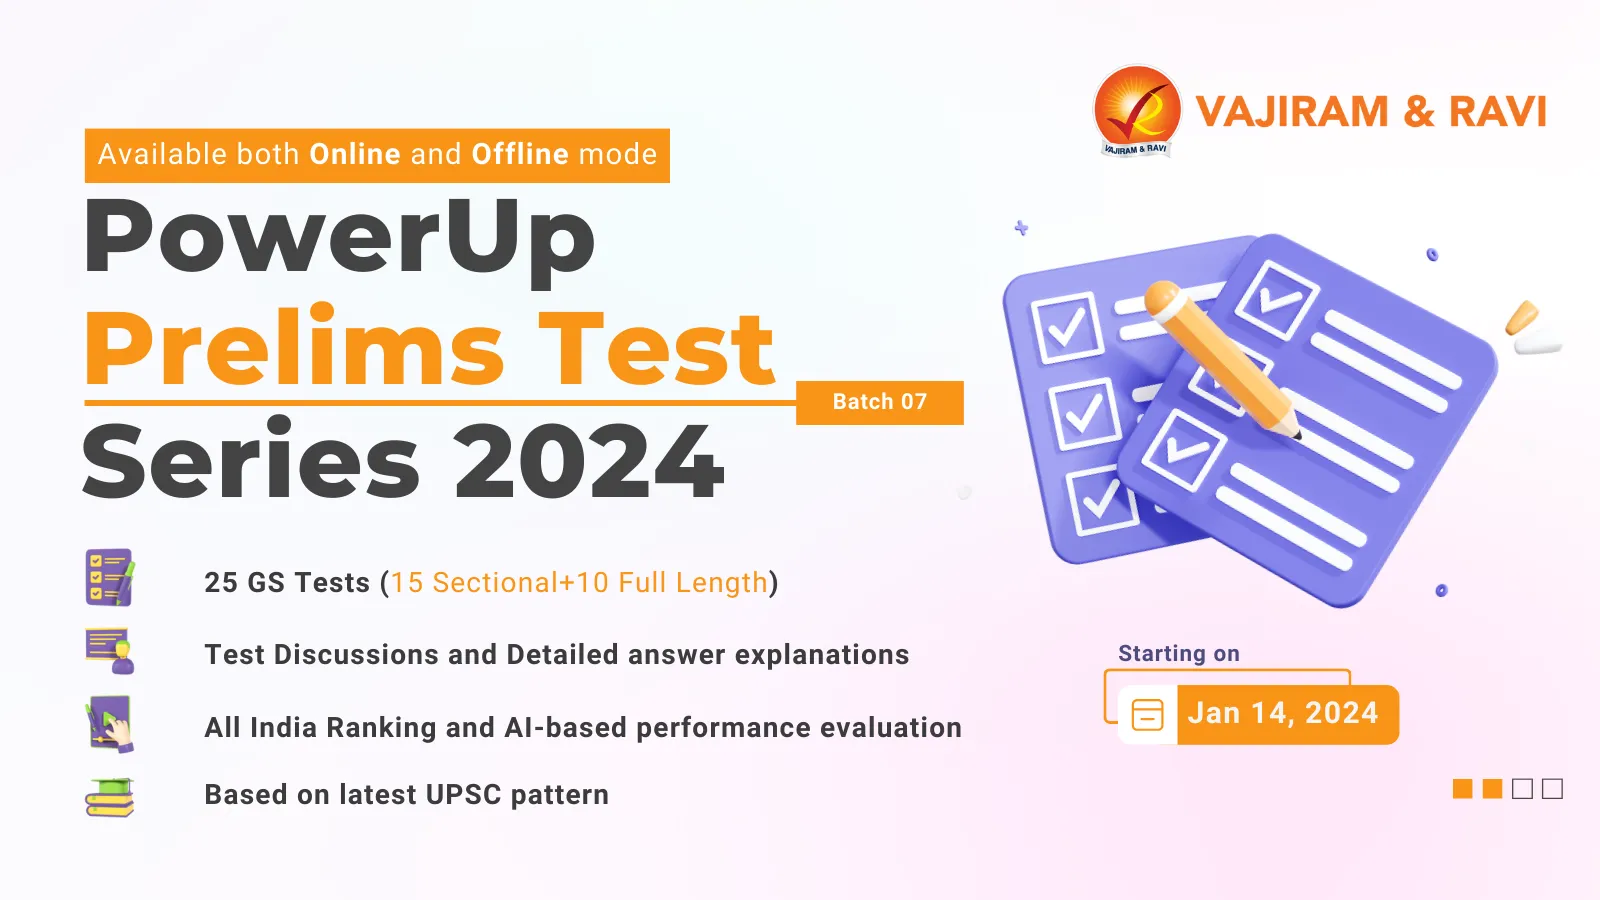 UPSC Exam Comprehensive News Analysis. Aug 10th, 2022 CNA. Download PDF